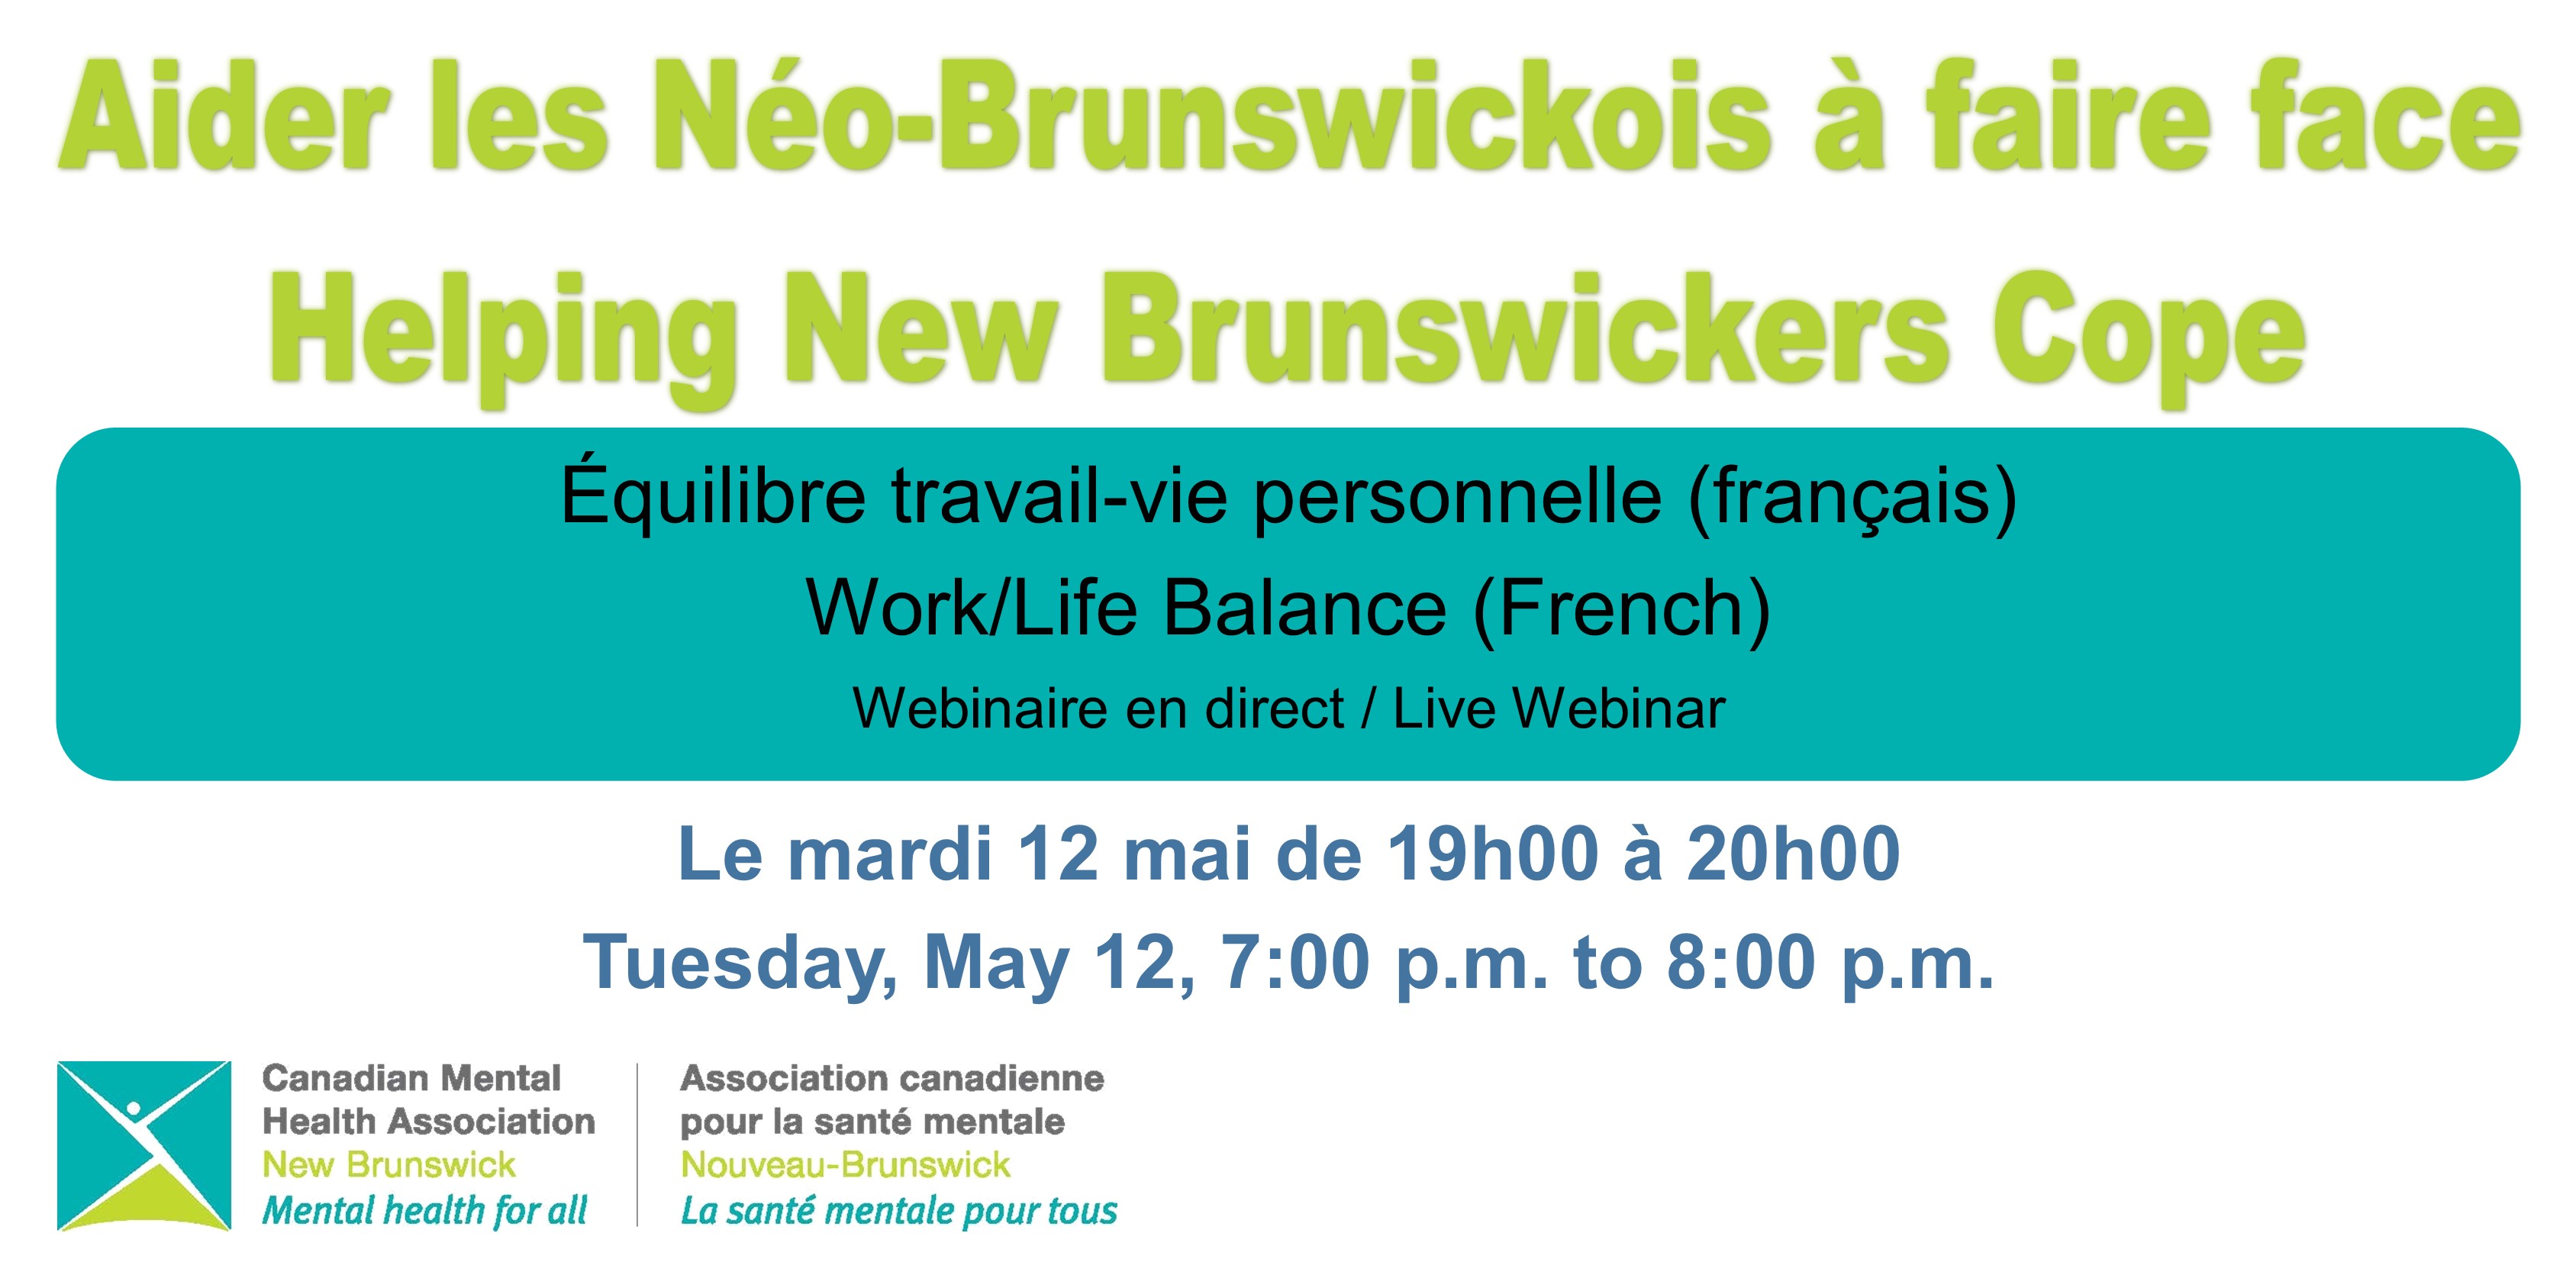 Work/Life Balance (French)